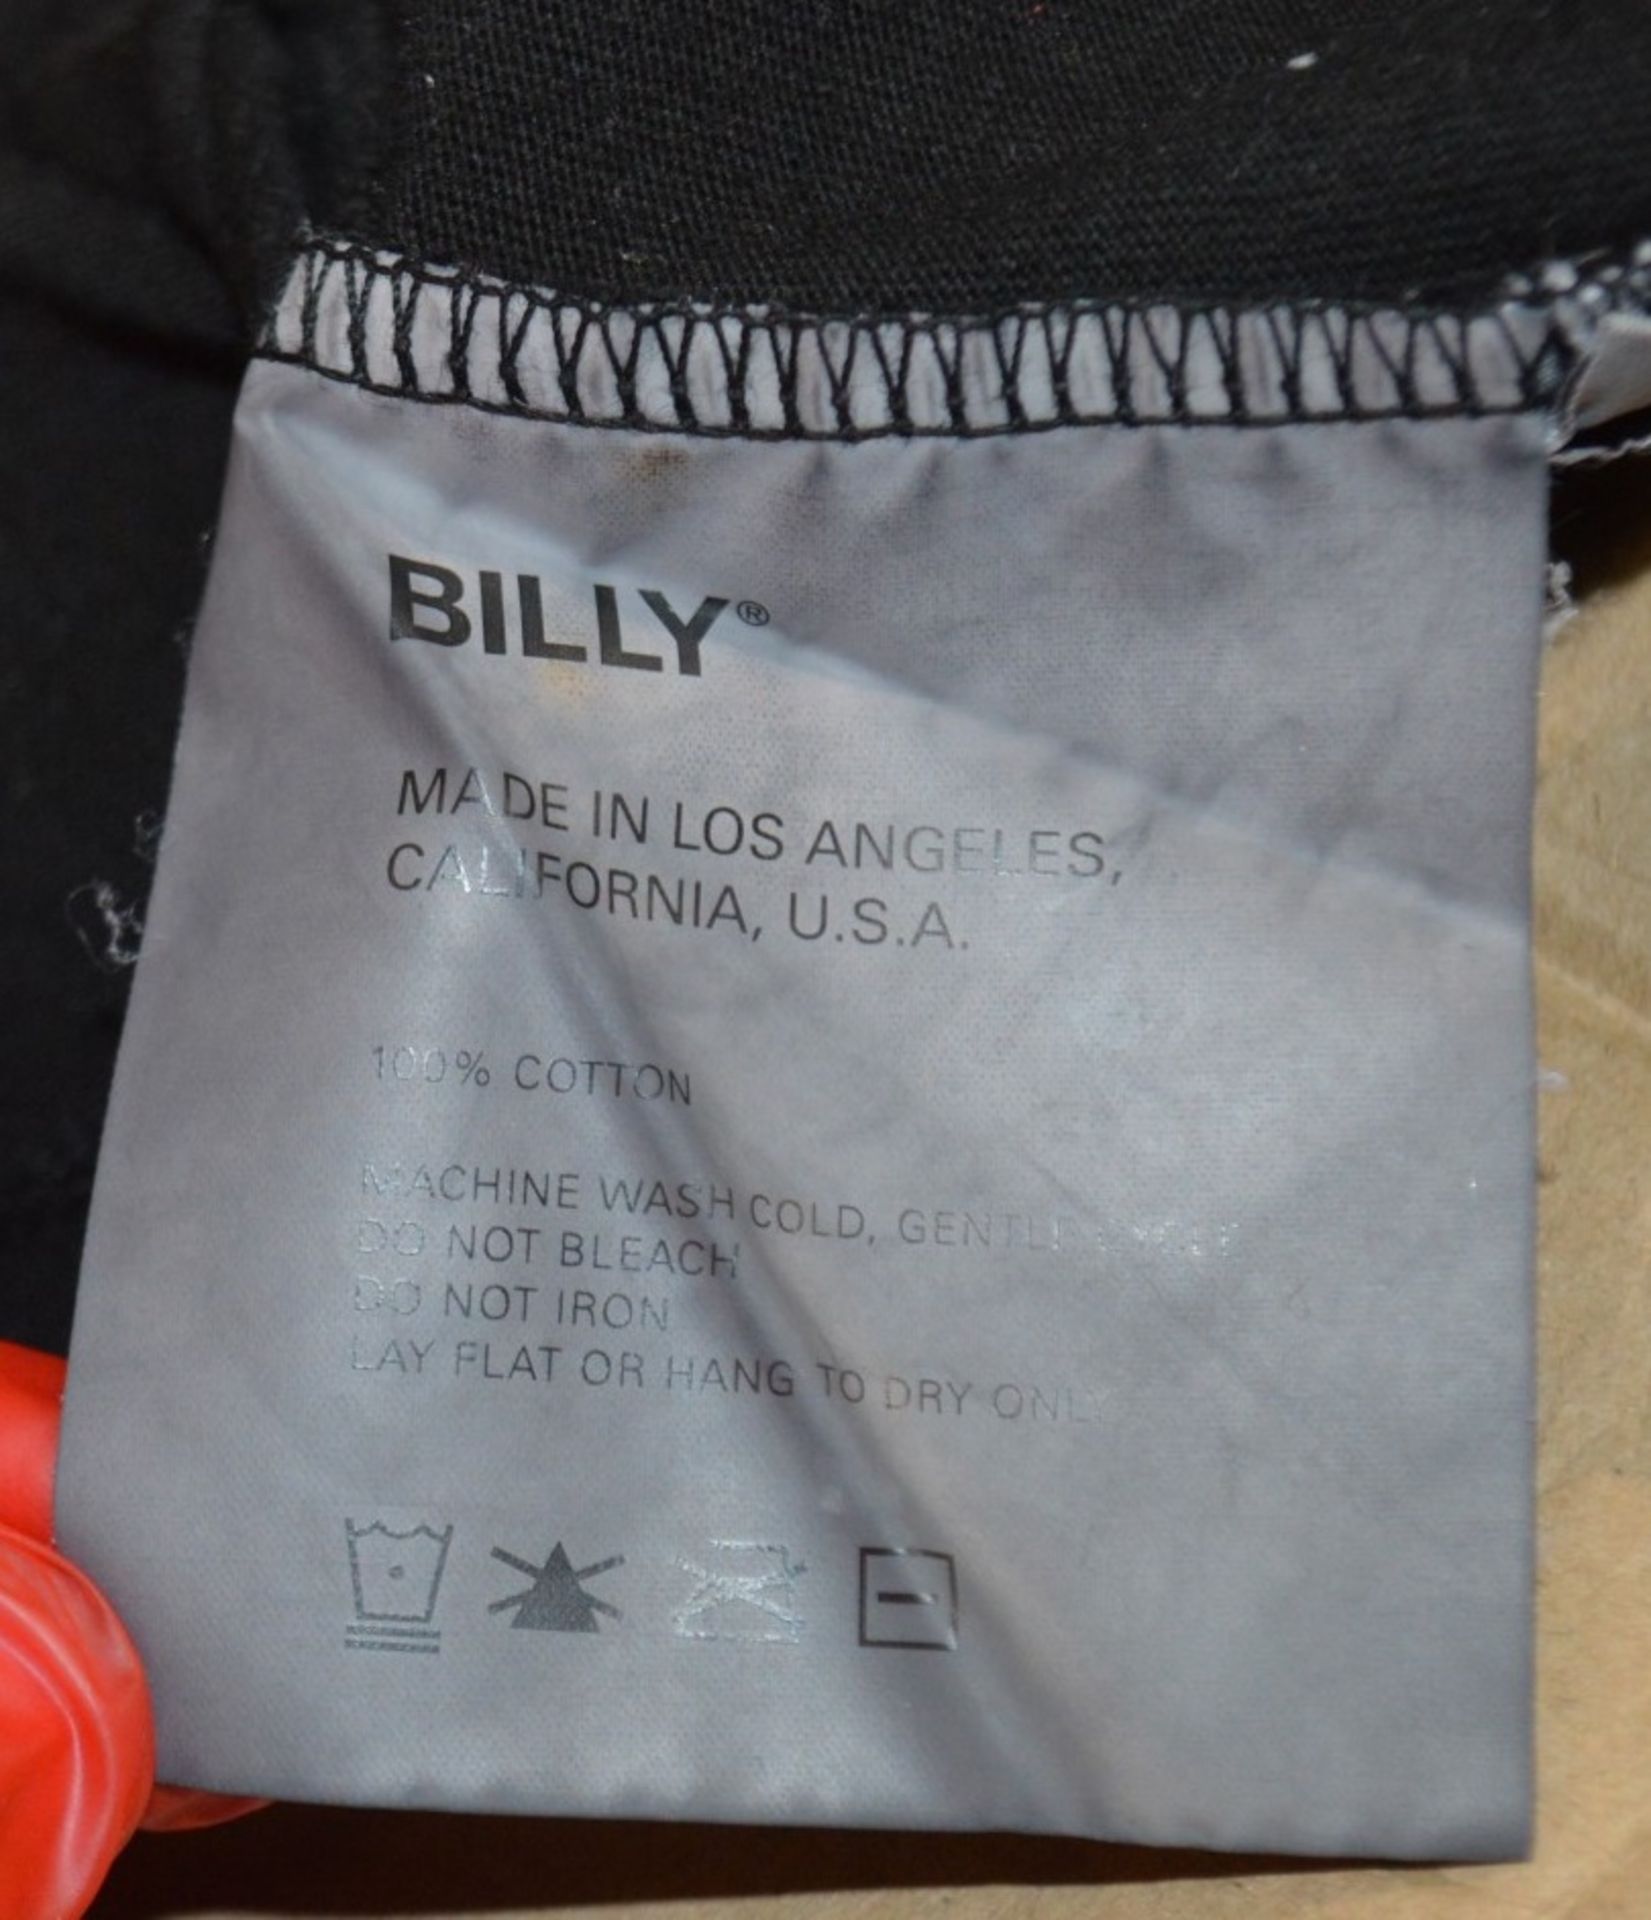 1 x Men's Genuine Billy Designer Distressed T-Shirt In Black "Billy" - SIZE: LARGE - Image 8 of 8